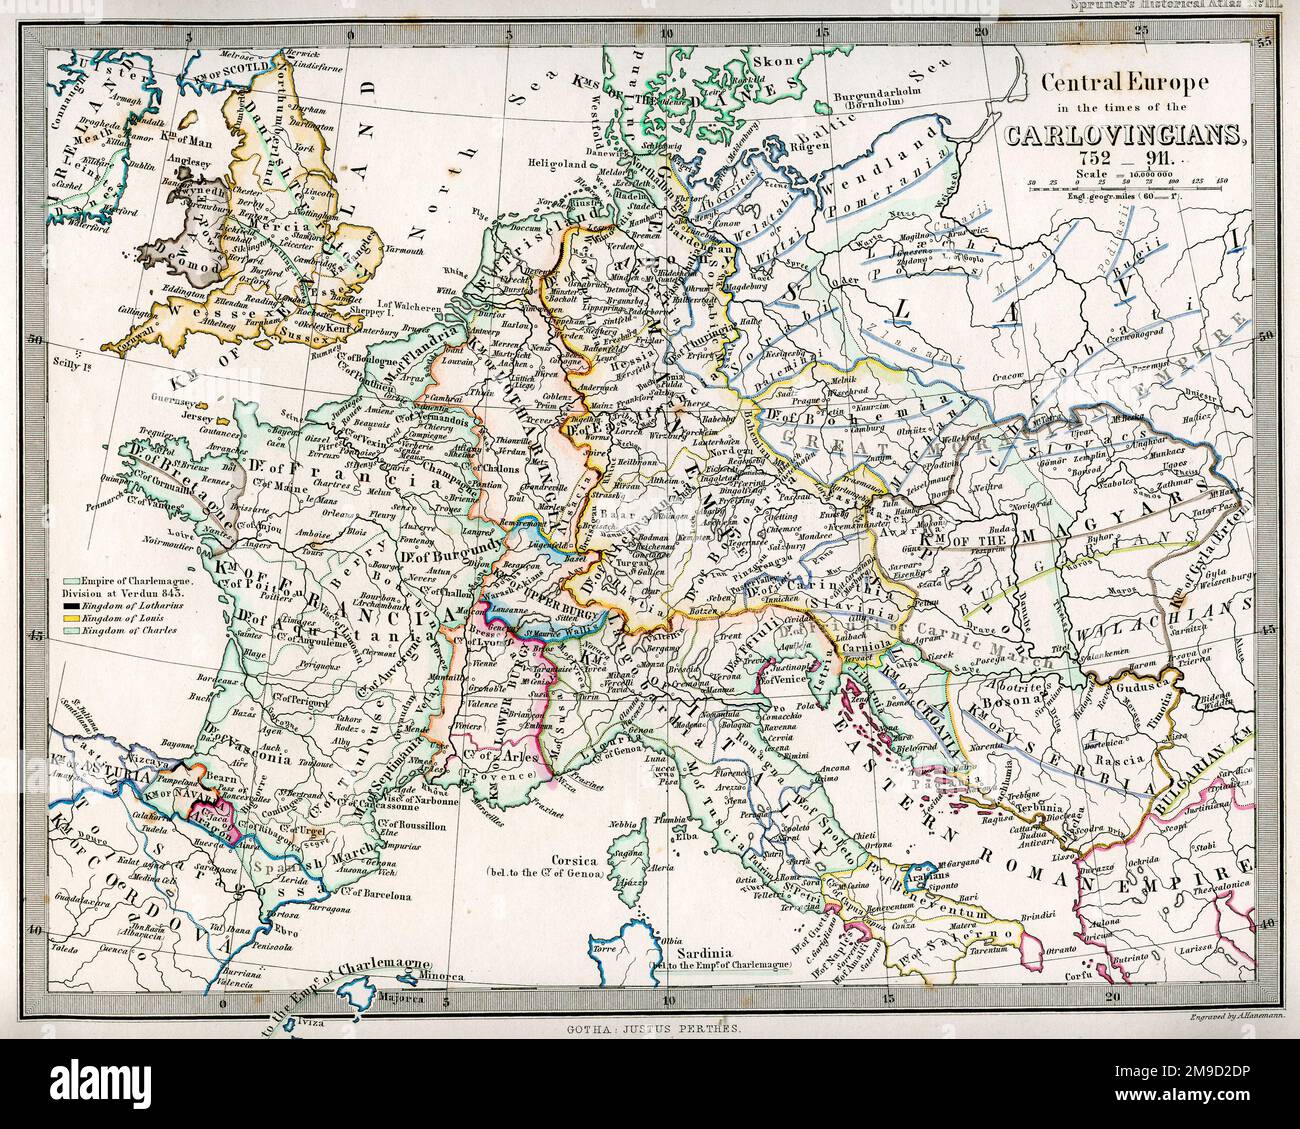 Karte Von Europa 752 - 911 - Carlovingians Stockfoto